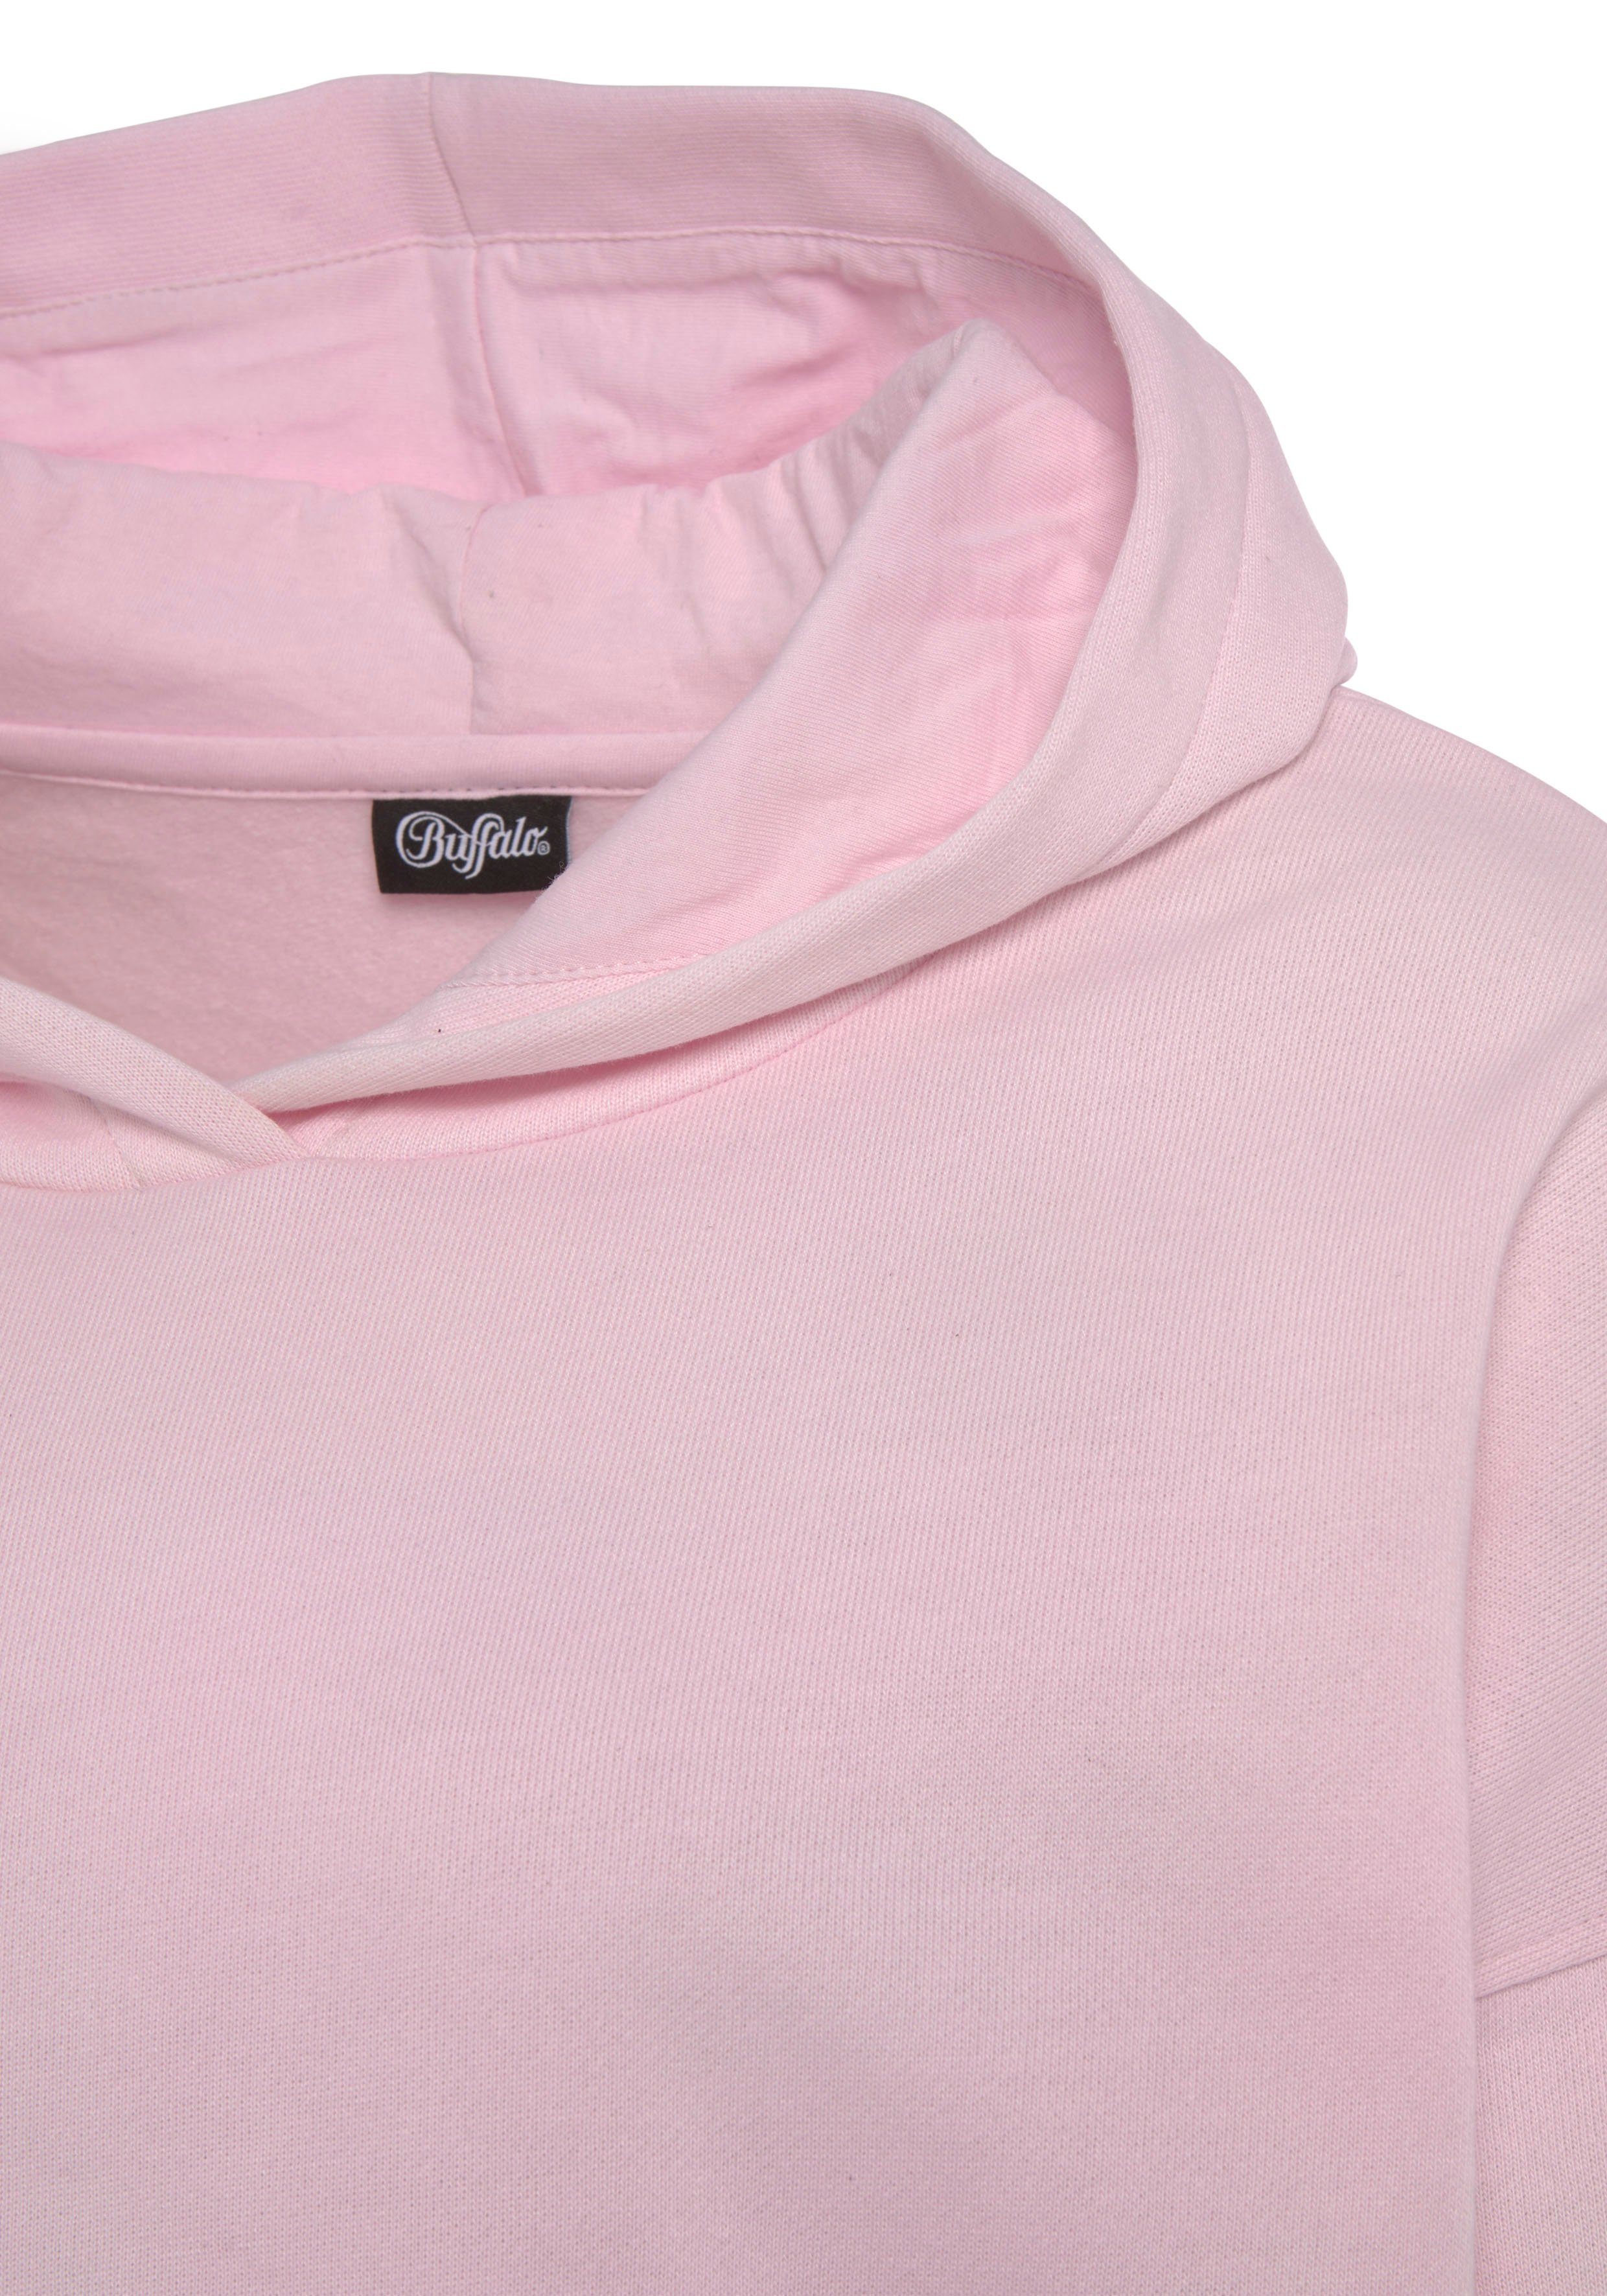 Buffalo Loungeanzug rosa -Kapuzensweatshirt Rippbündchen, Rückenprint mit und Hoodie